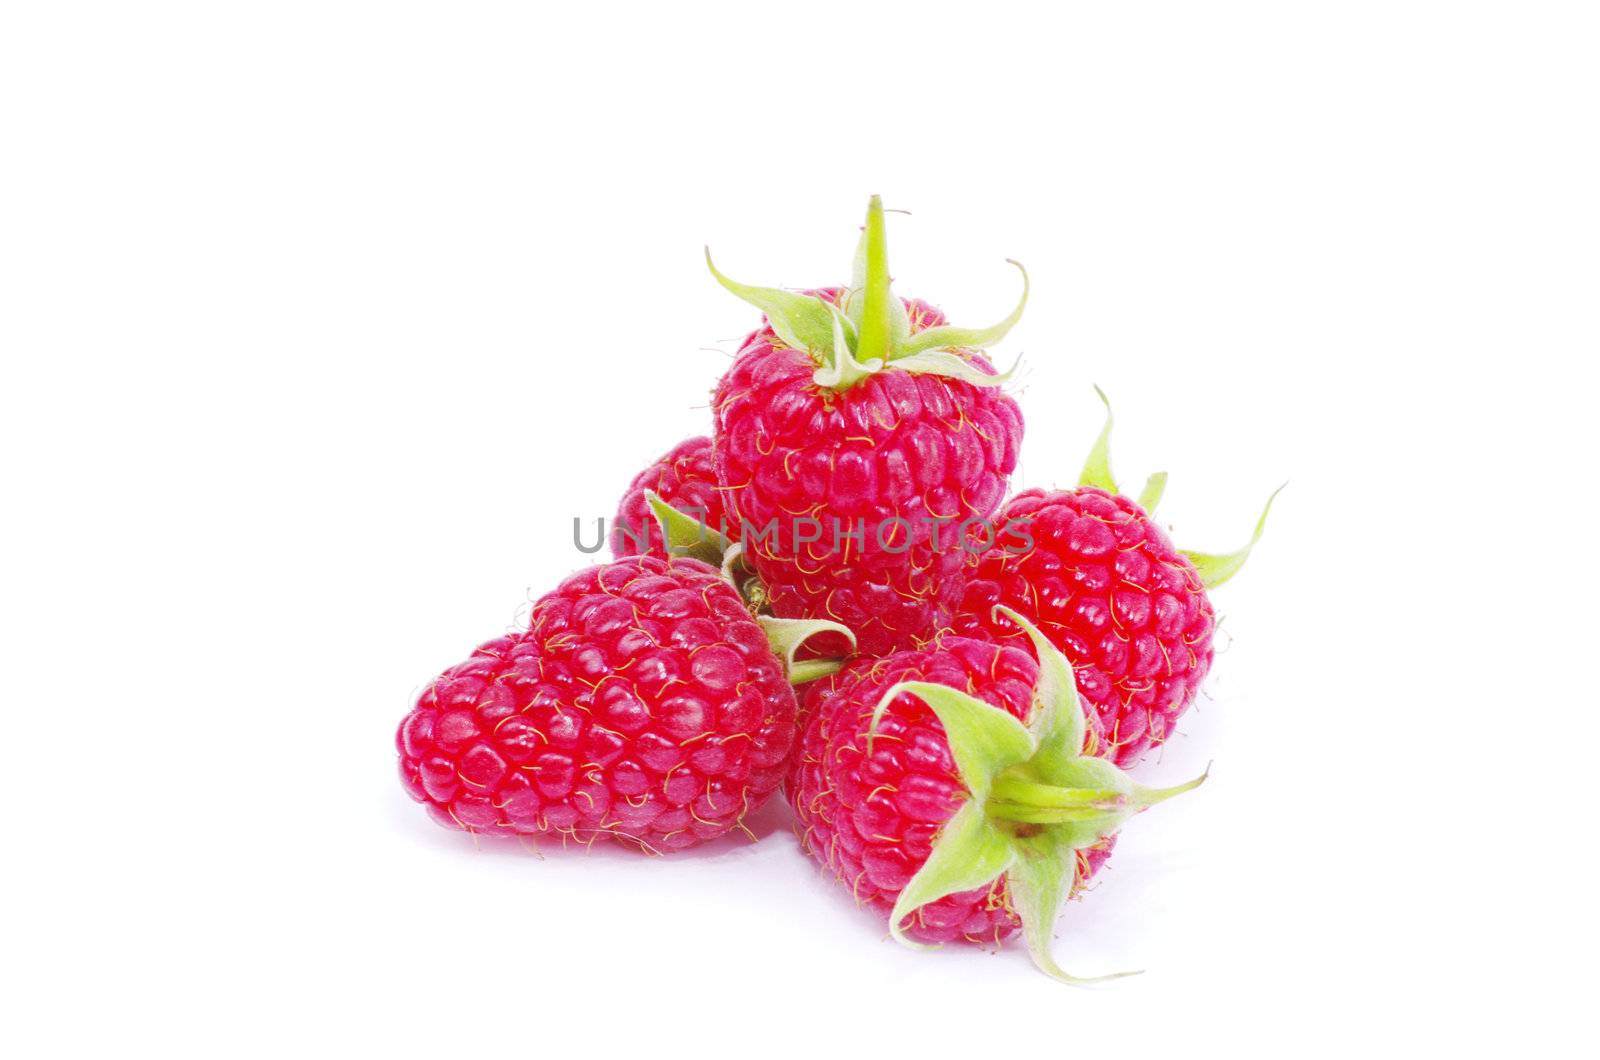 fresh raspberry closeup isolated on white background